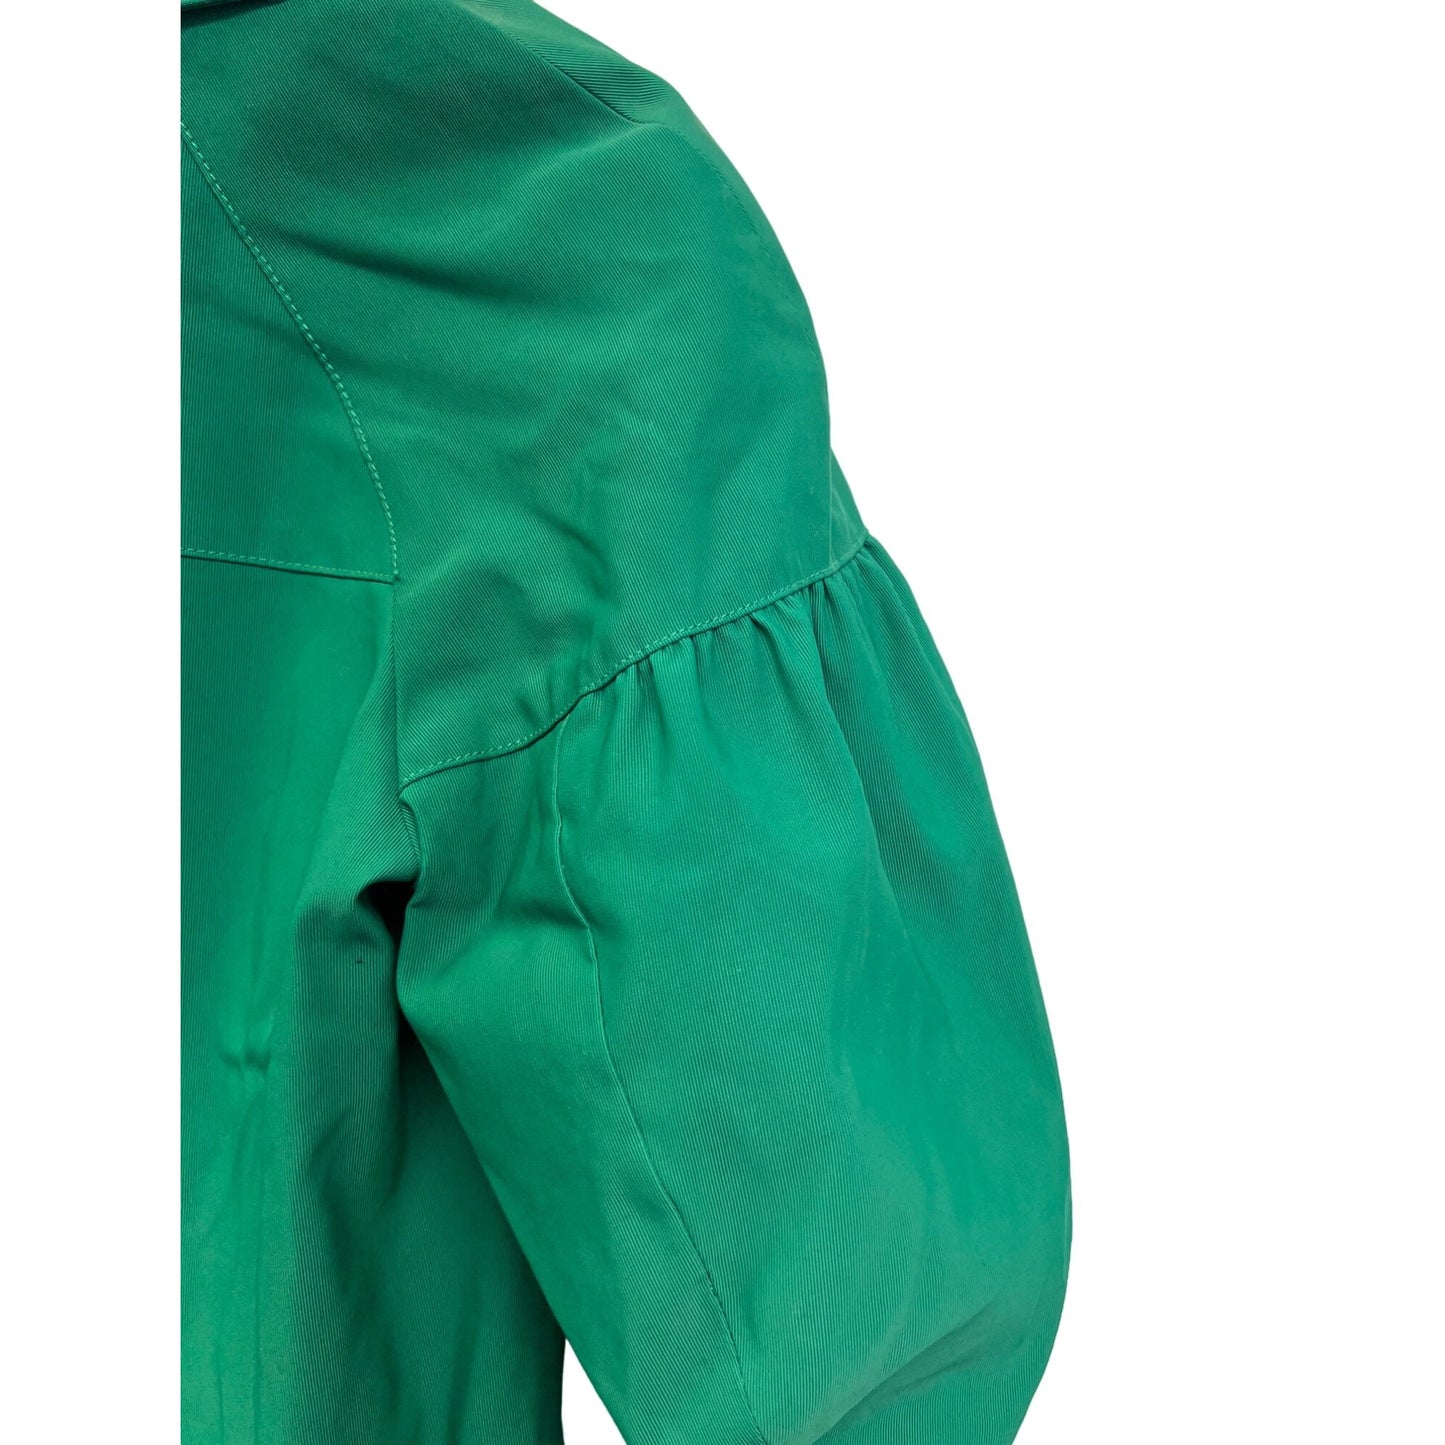 Nine West NWT Green Cropped Blazer Jacket with Peplum Sleeves